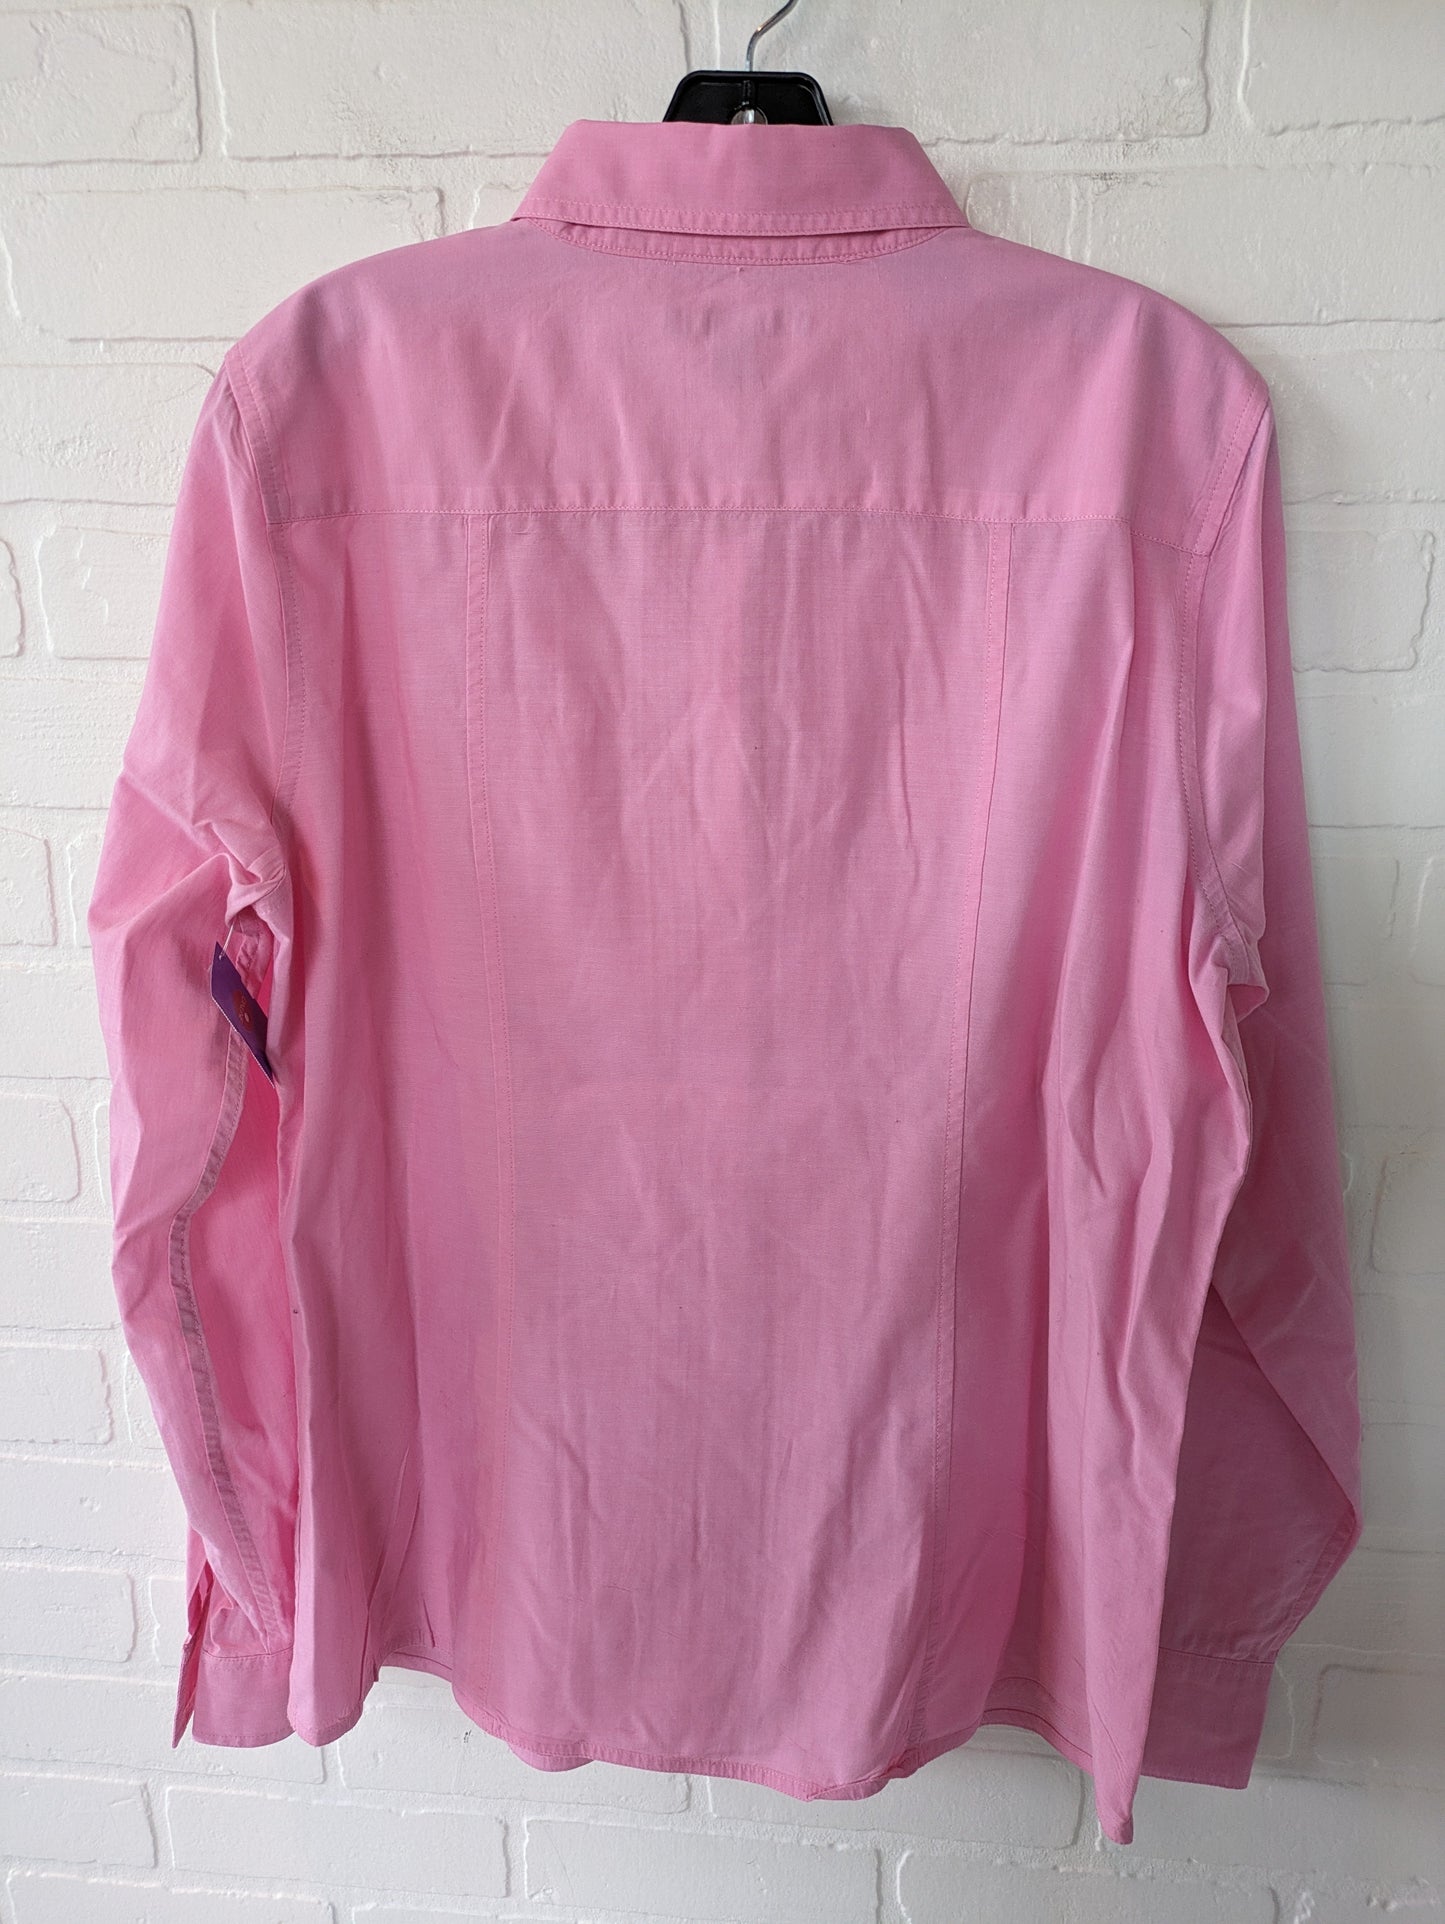 Pink Blouse Long Sleeve Banana Republic, Size L